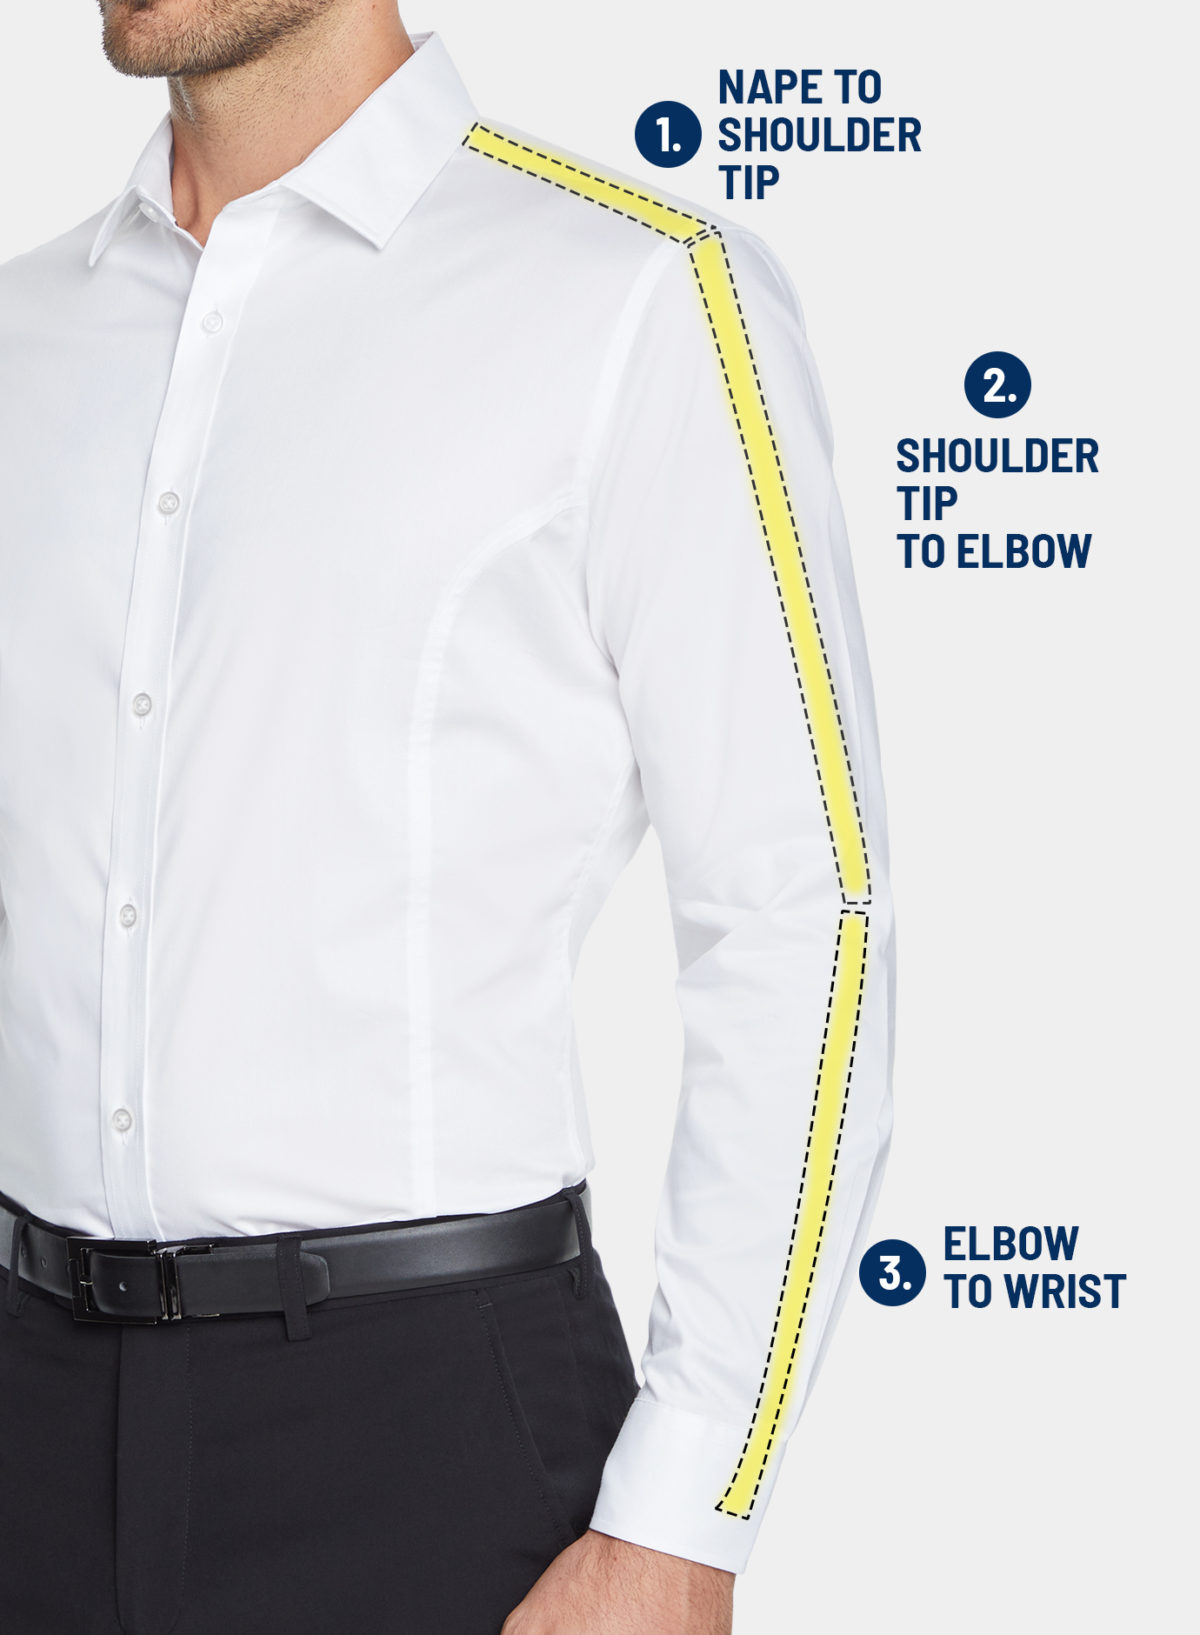 Proper Dress Shirt Sleeve Length: Measurement & Fit